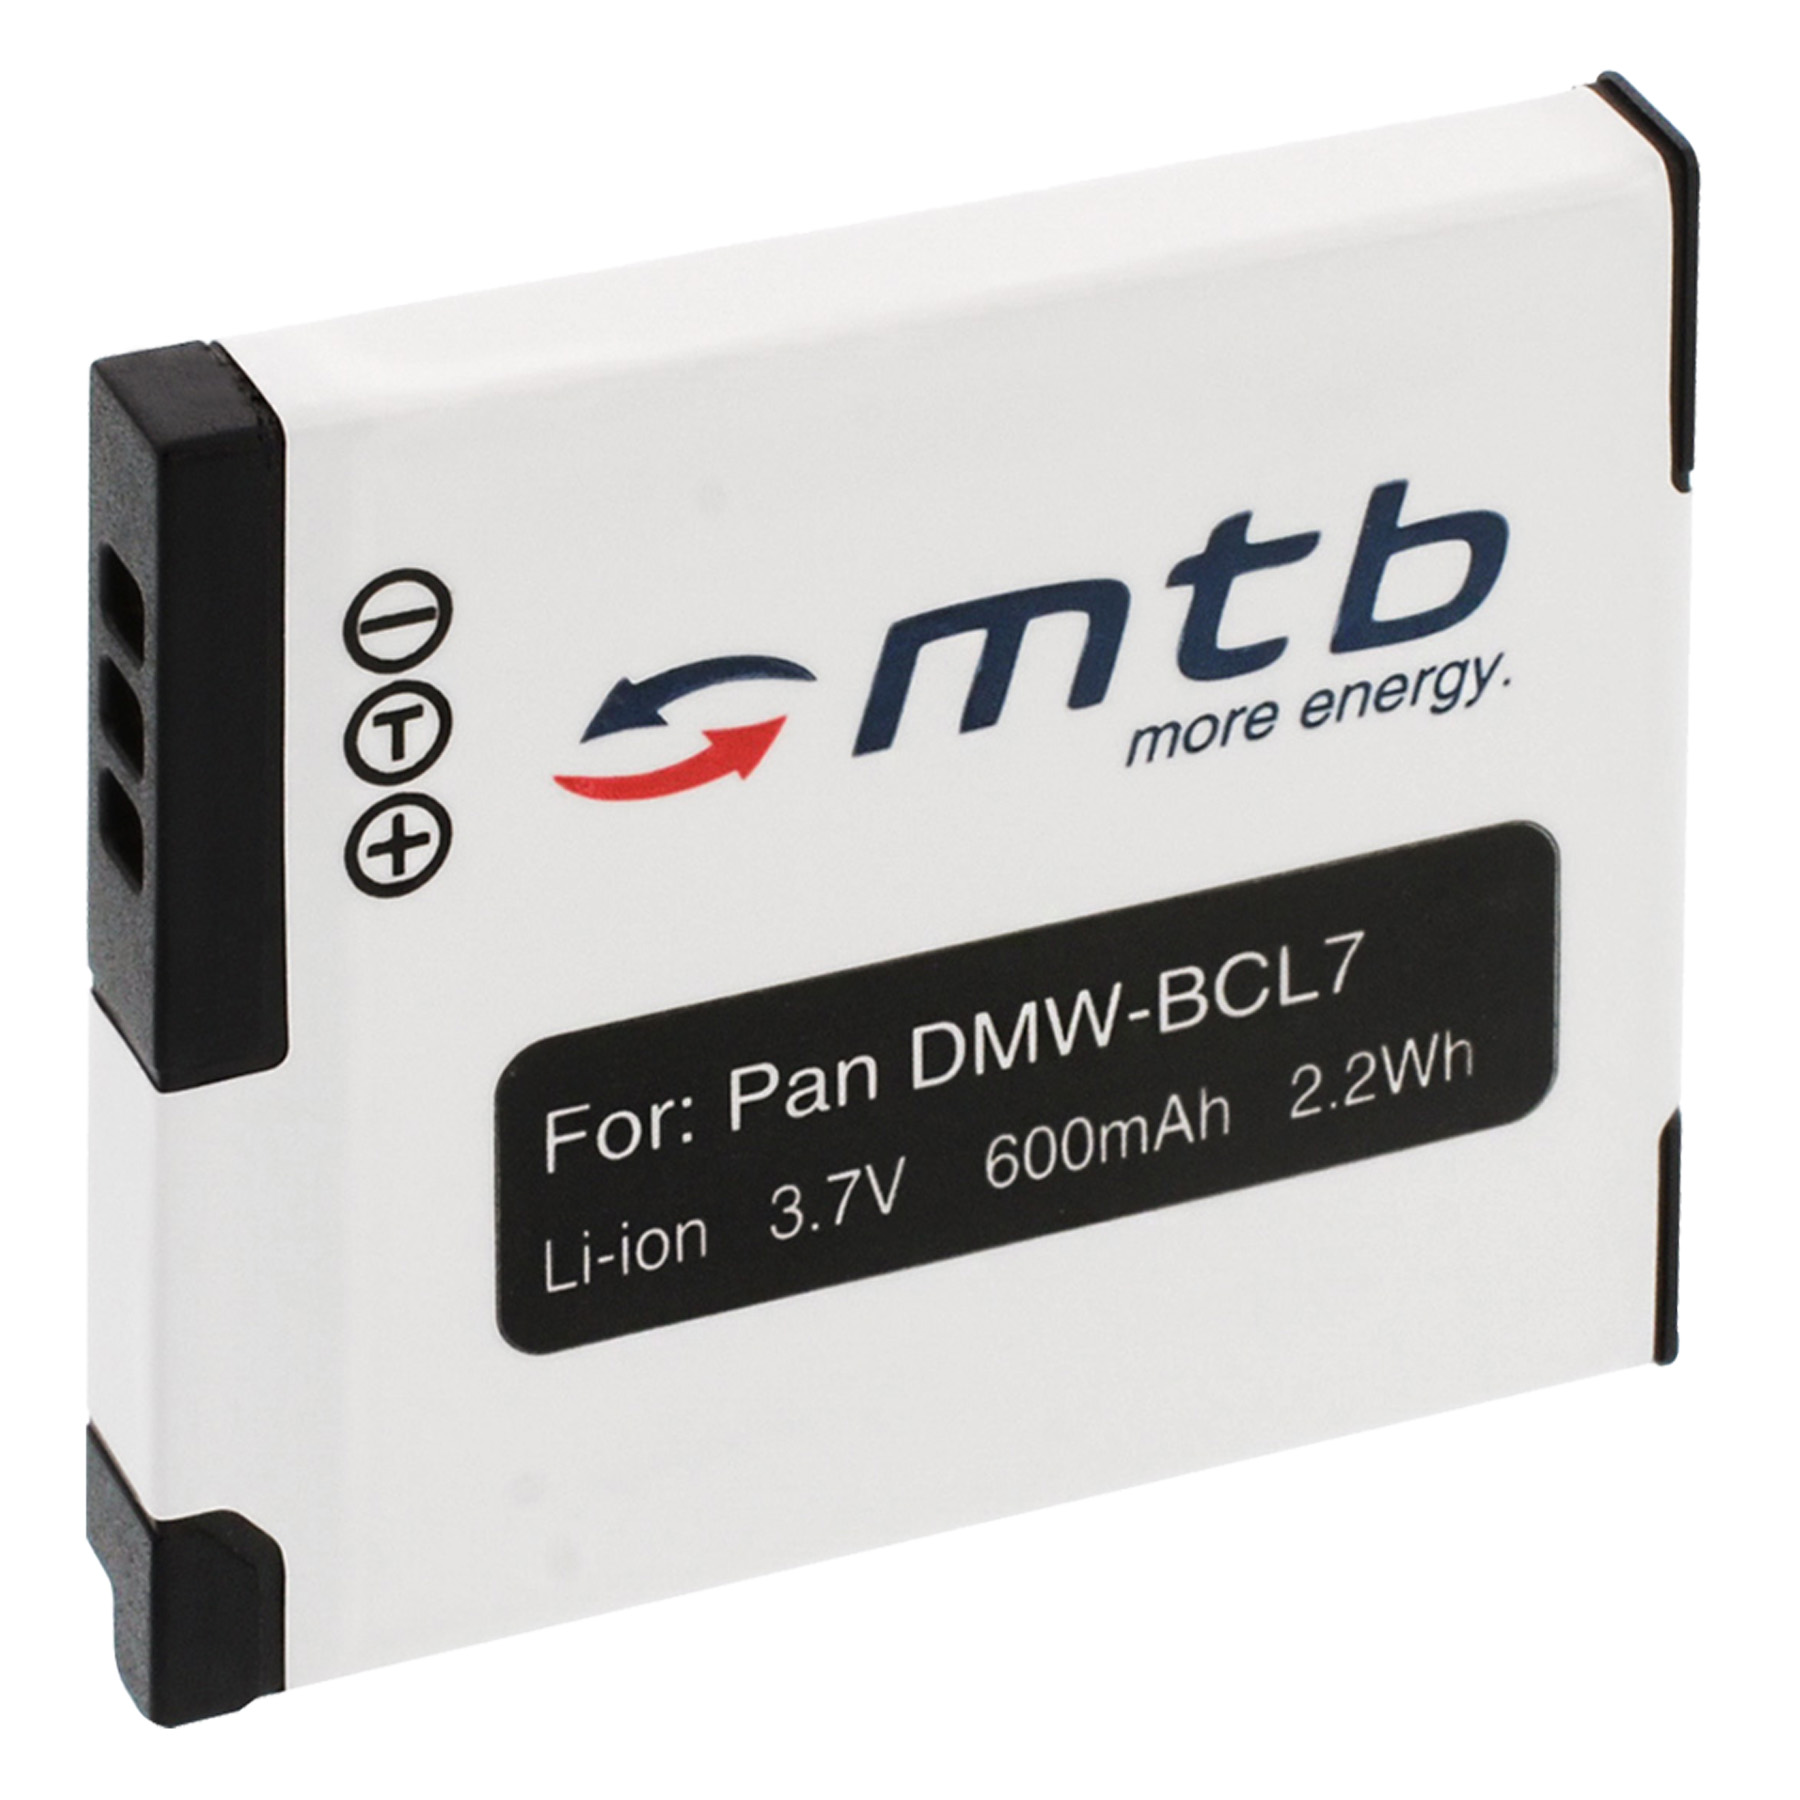 MTB MORE ENERGY BAT-373 mAh Li-Ion, 600 DMW-BCL7 Akku